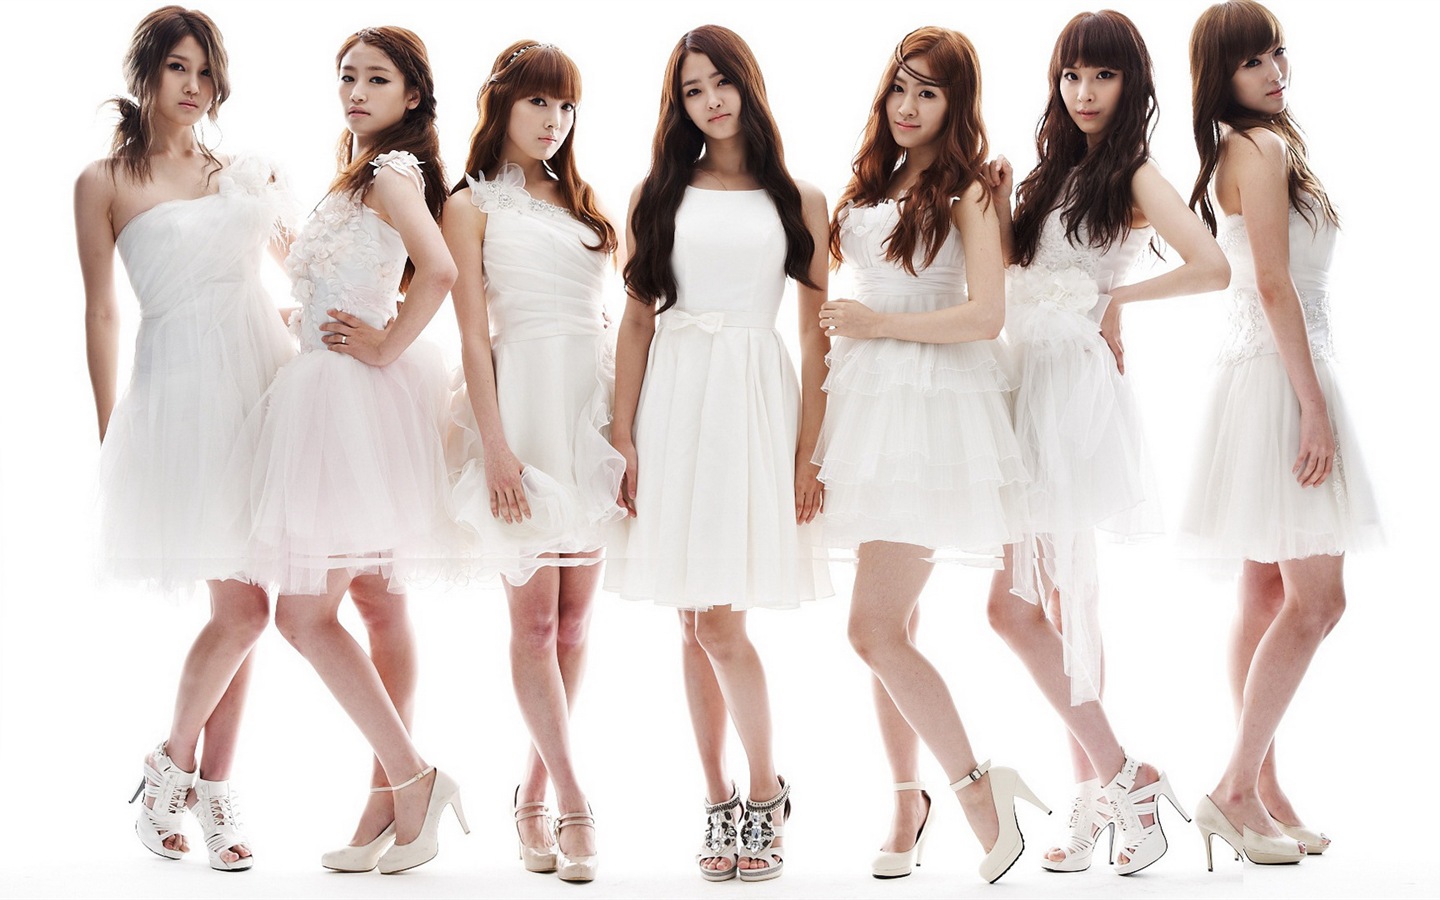 CHI CHI koreanische Musik Girlgroup HD Wallpapers #5 - 1440x900